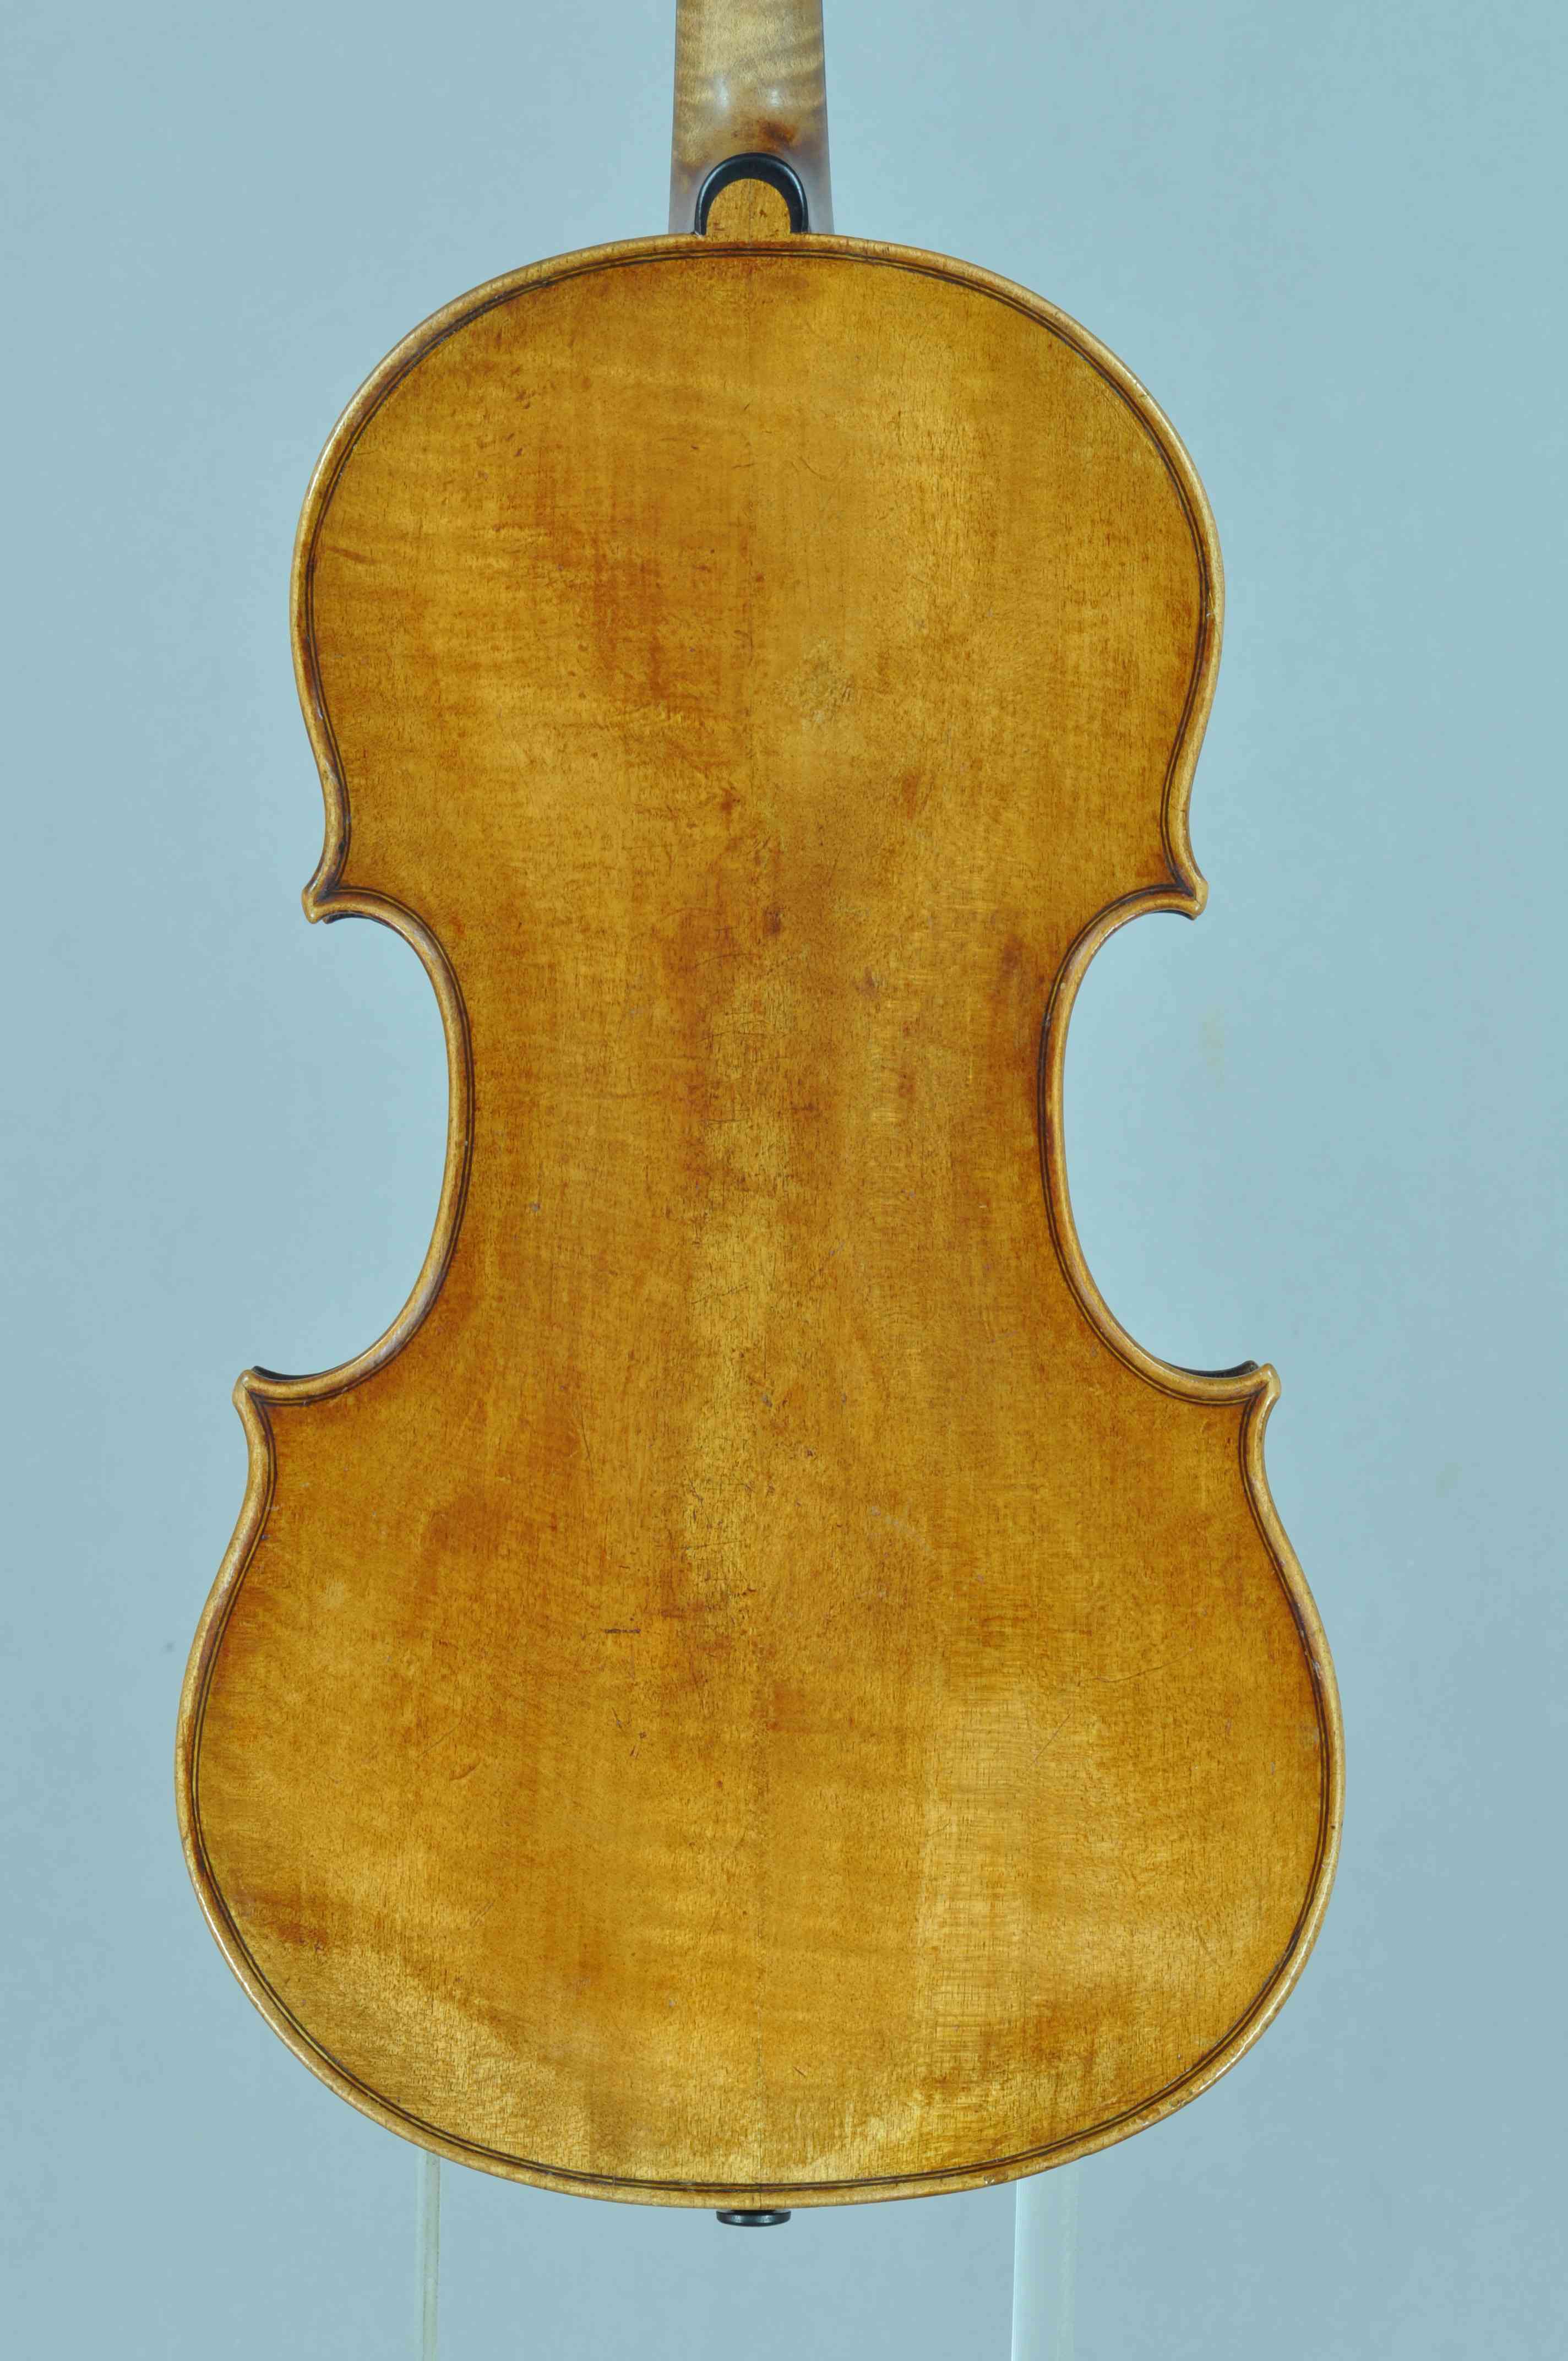 Klotz Family “Joseph Klotz, 1786” Label, Germany – Mittenwald